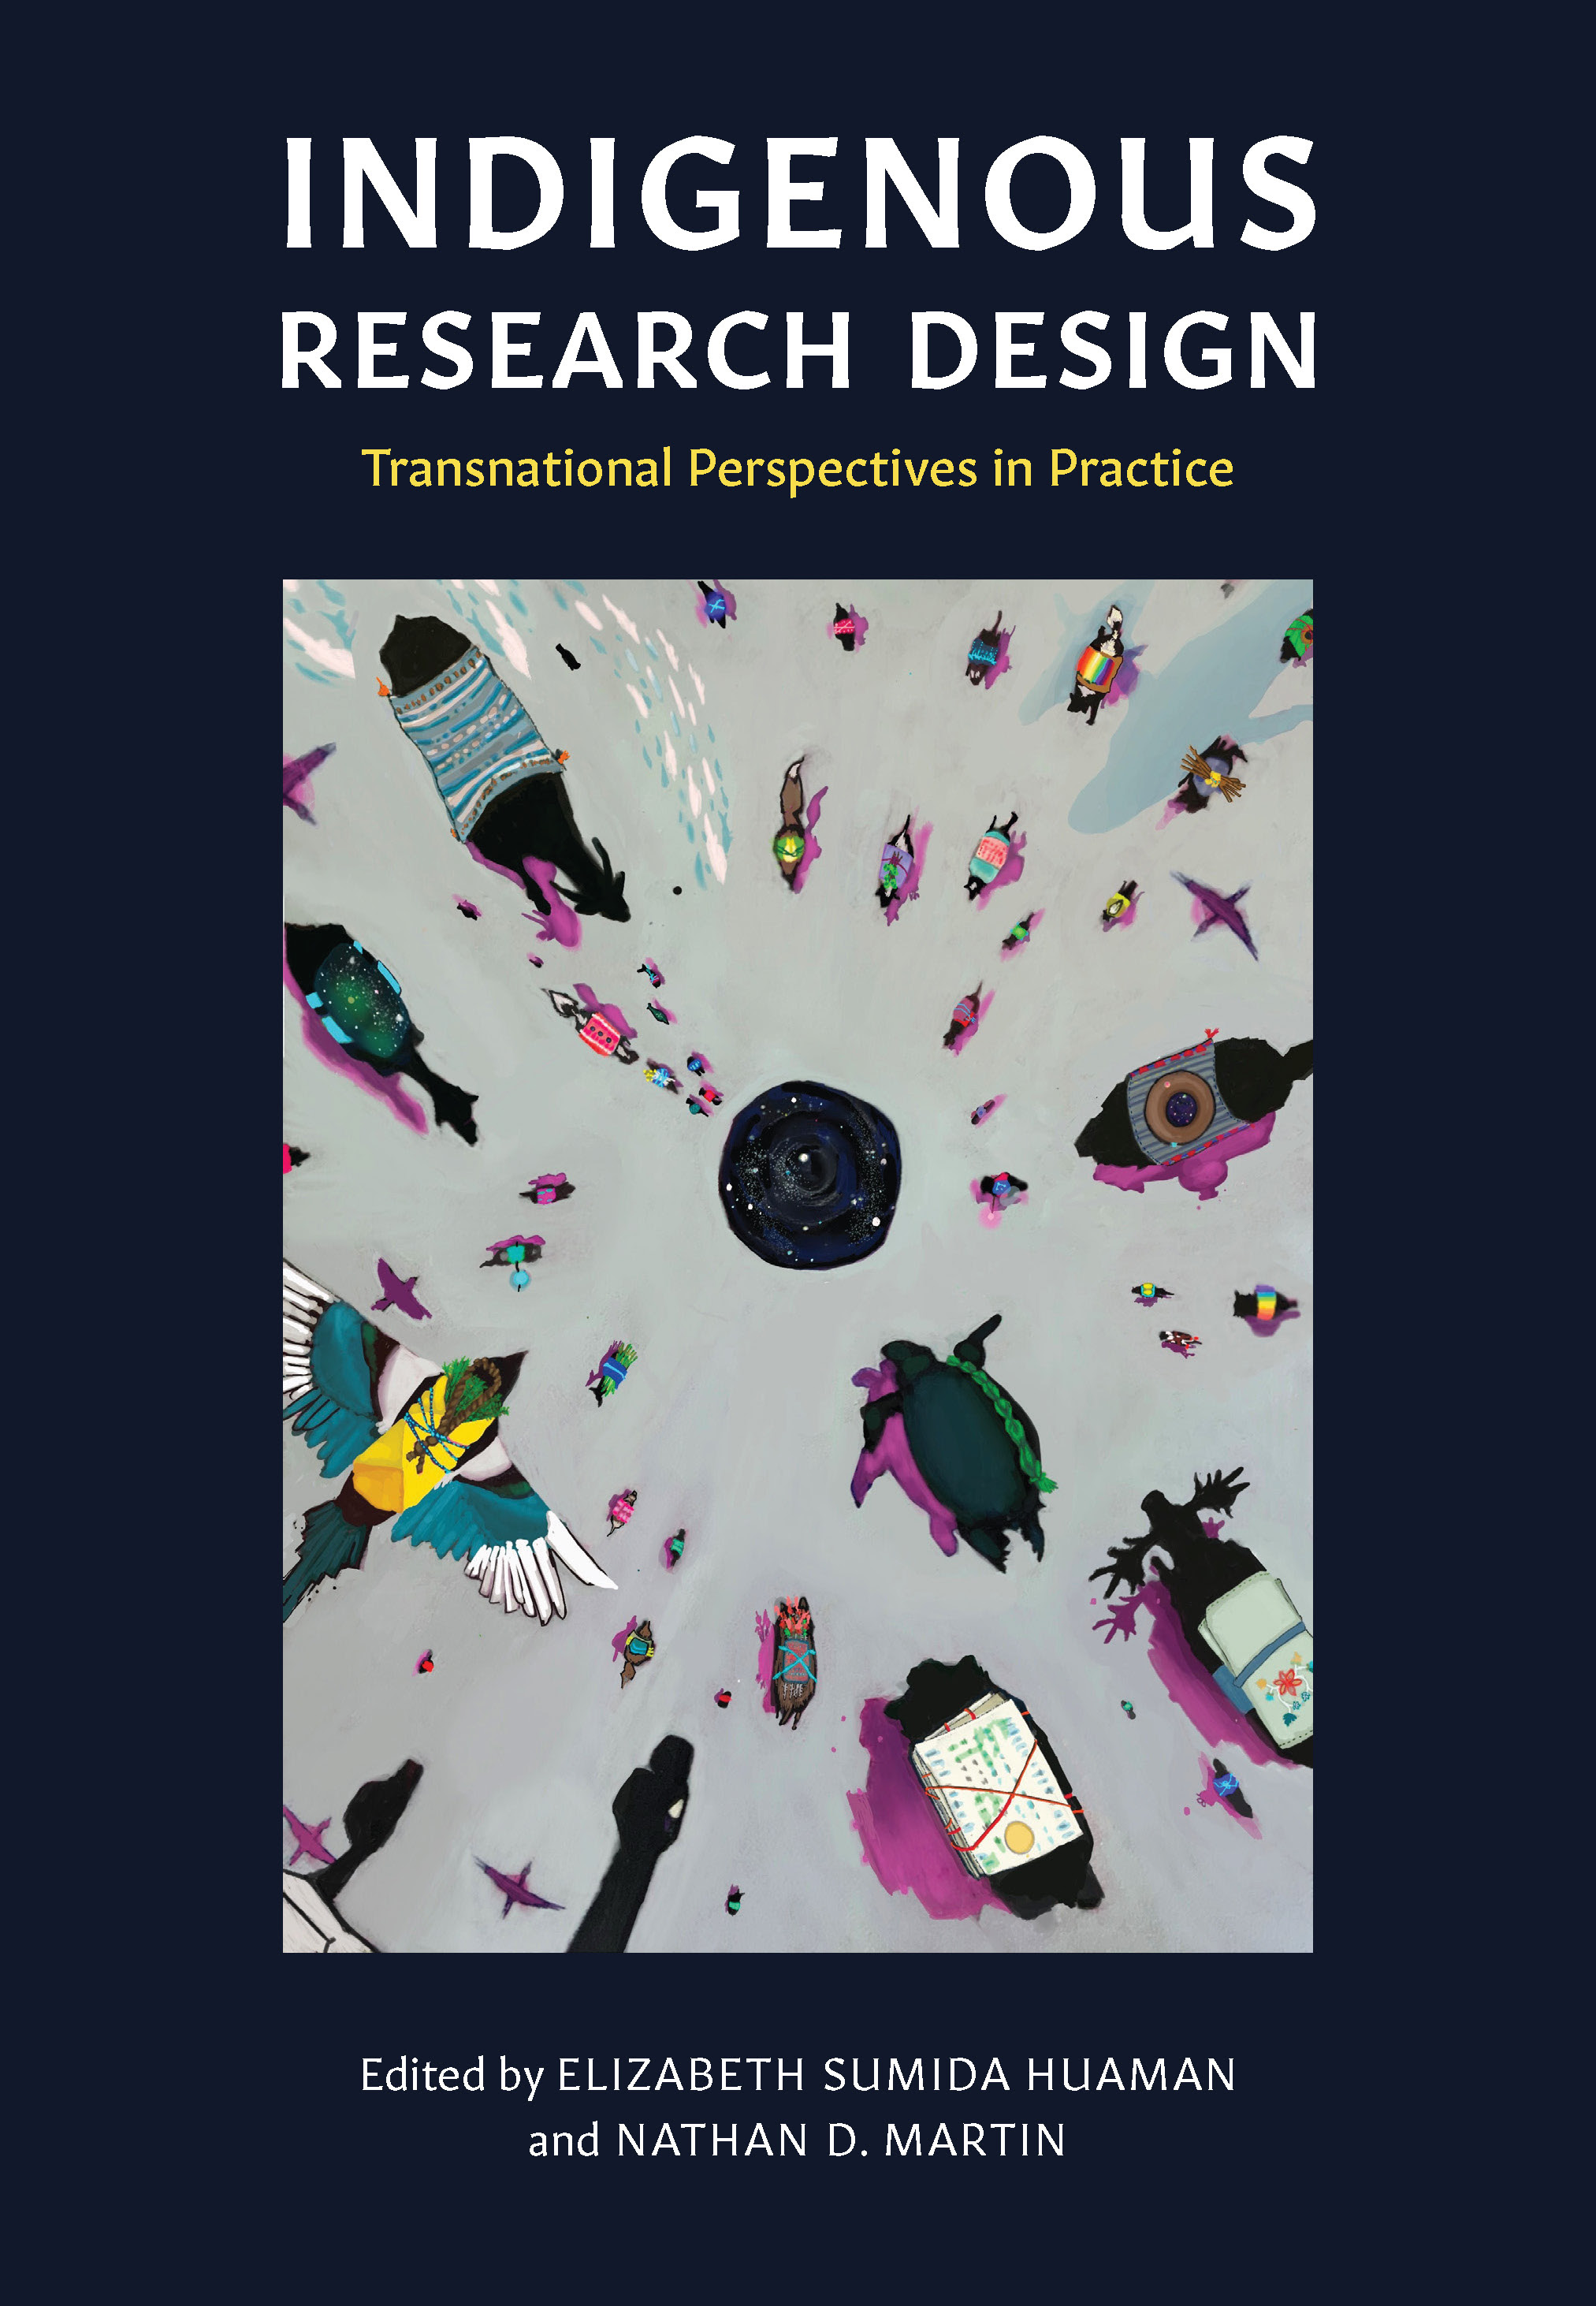 Indiginous Research Design, co-edited by Elizabeth Sumida Huaman